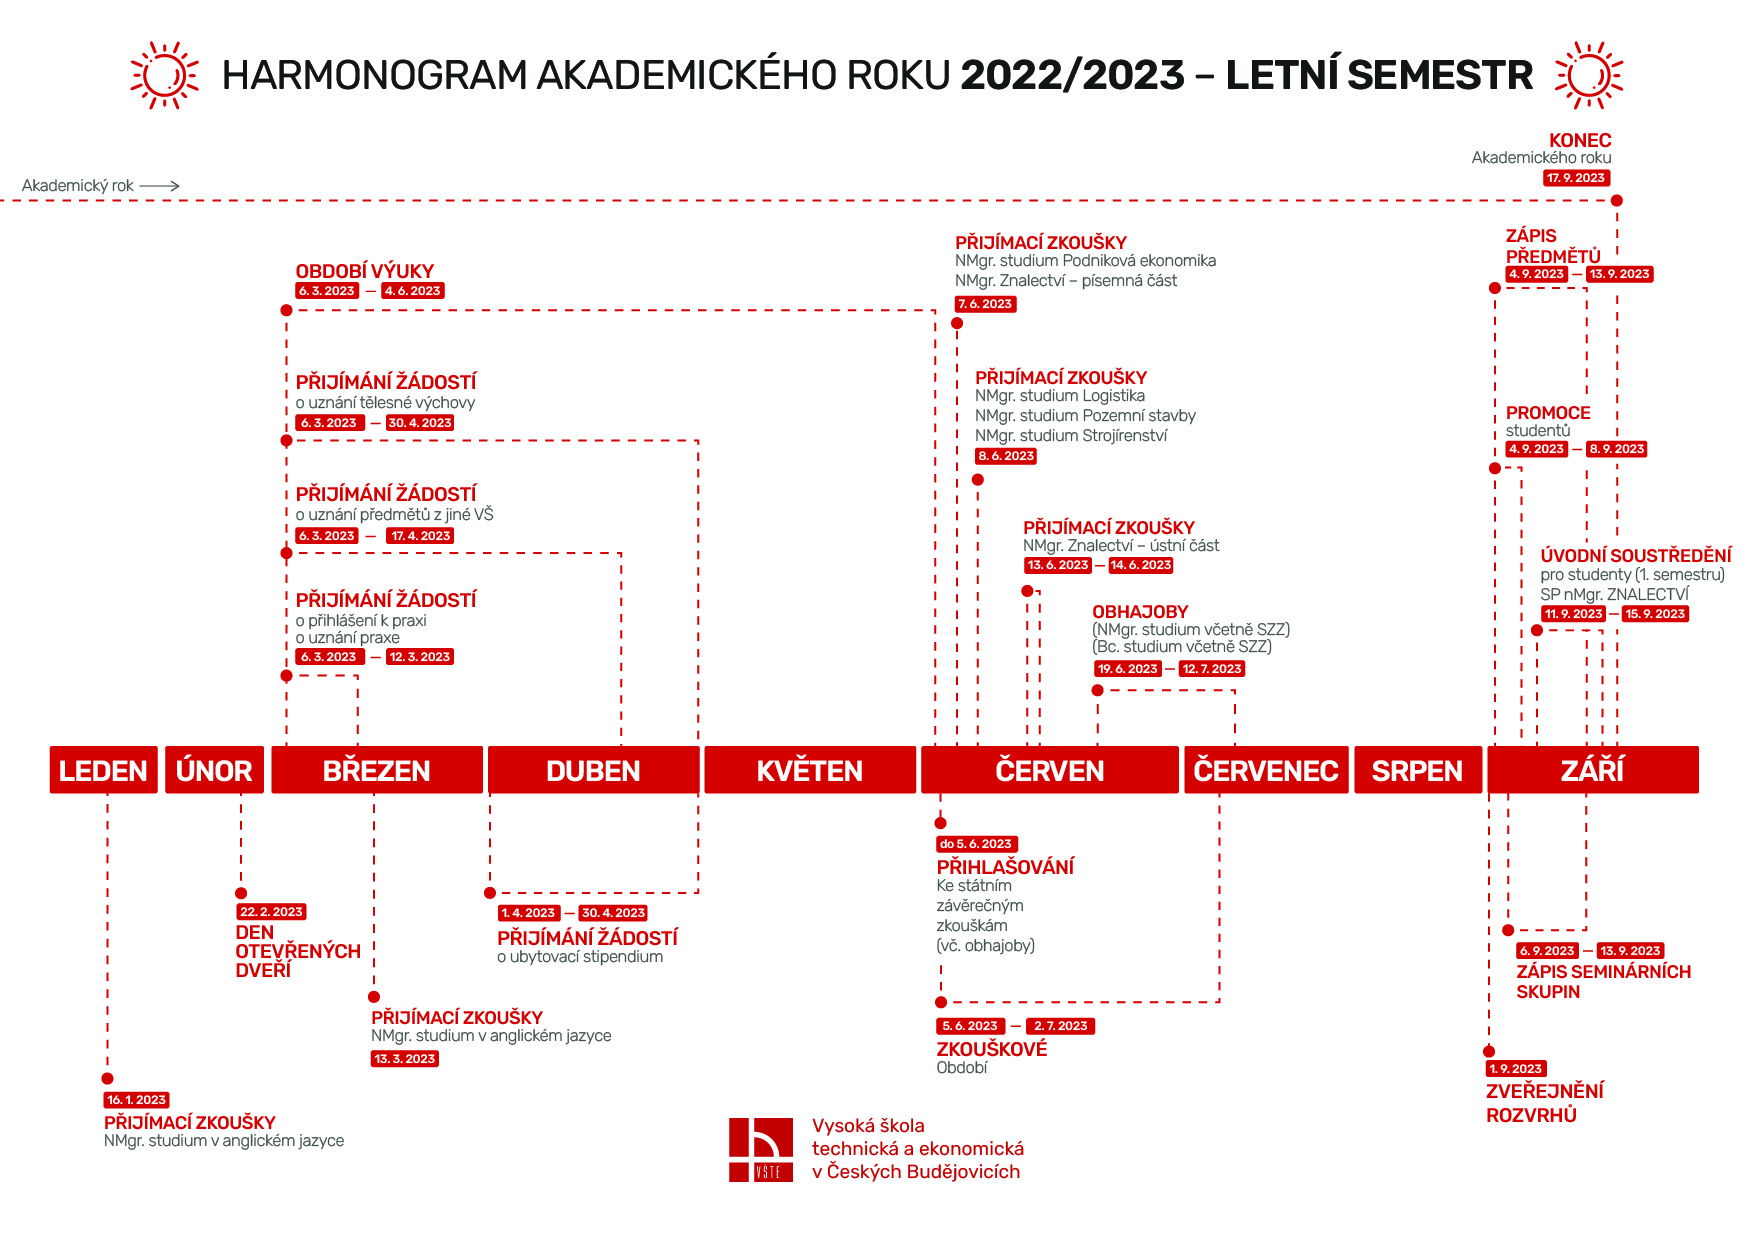 Harmonogram AR 2022/2023 - letní semestr